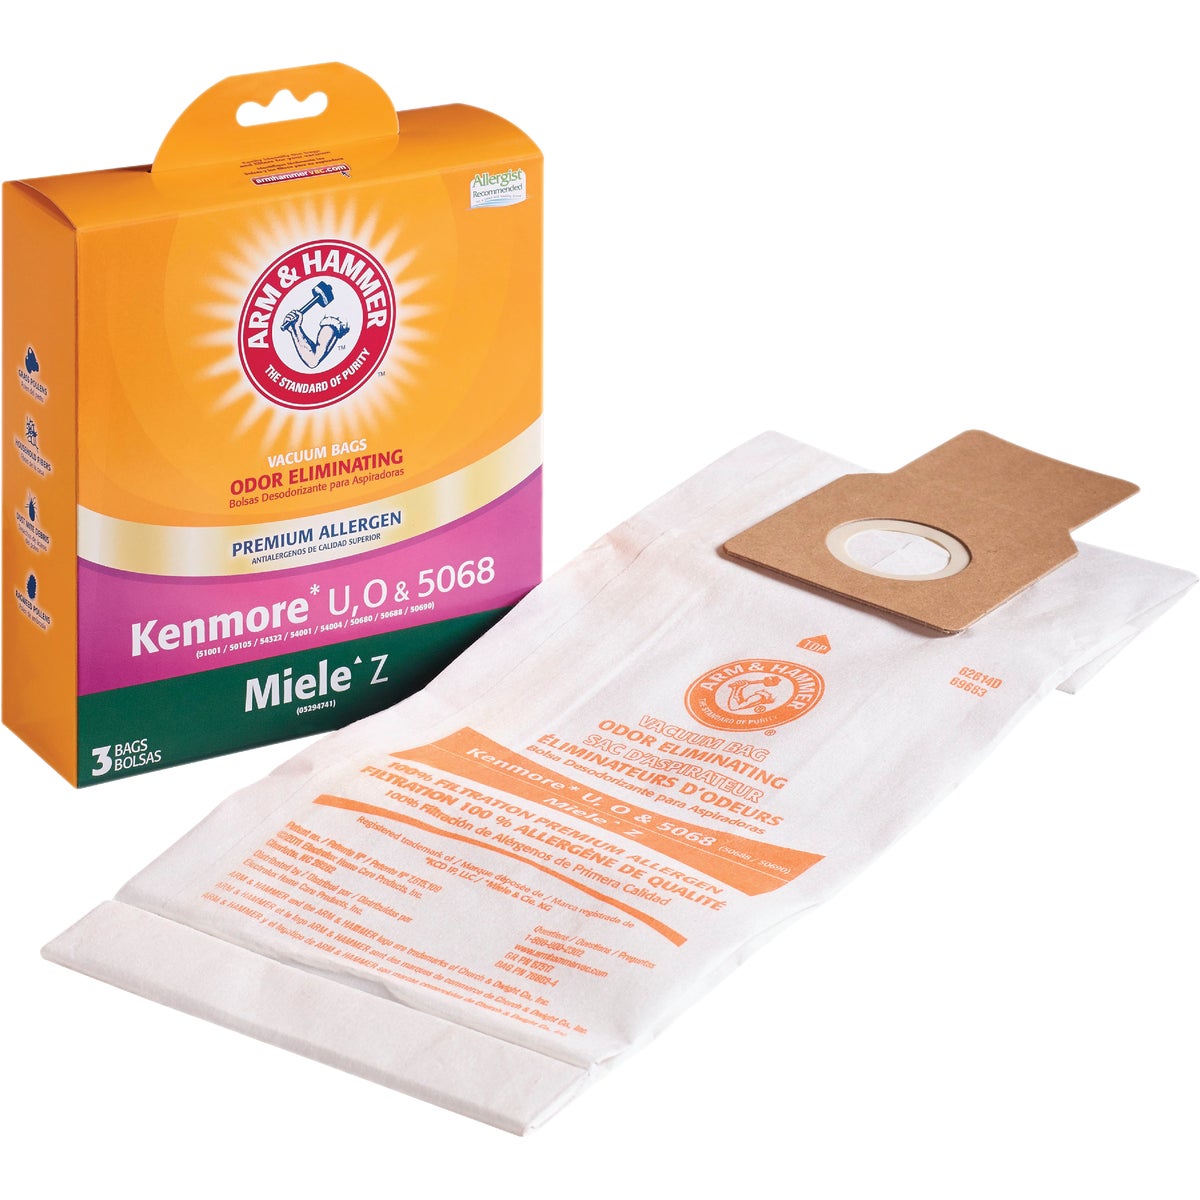 Arm & Hammer Kenmore U, L, O & 5068 Premium Allergen Vacuum Bag (3-Pack)